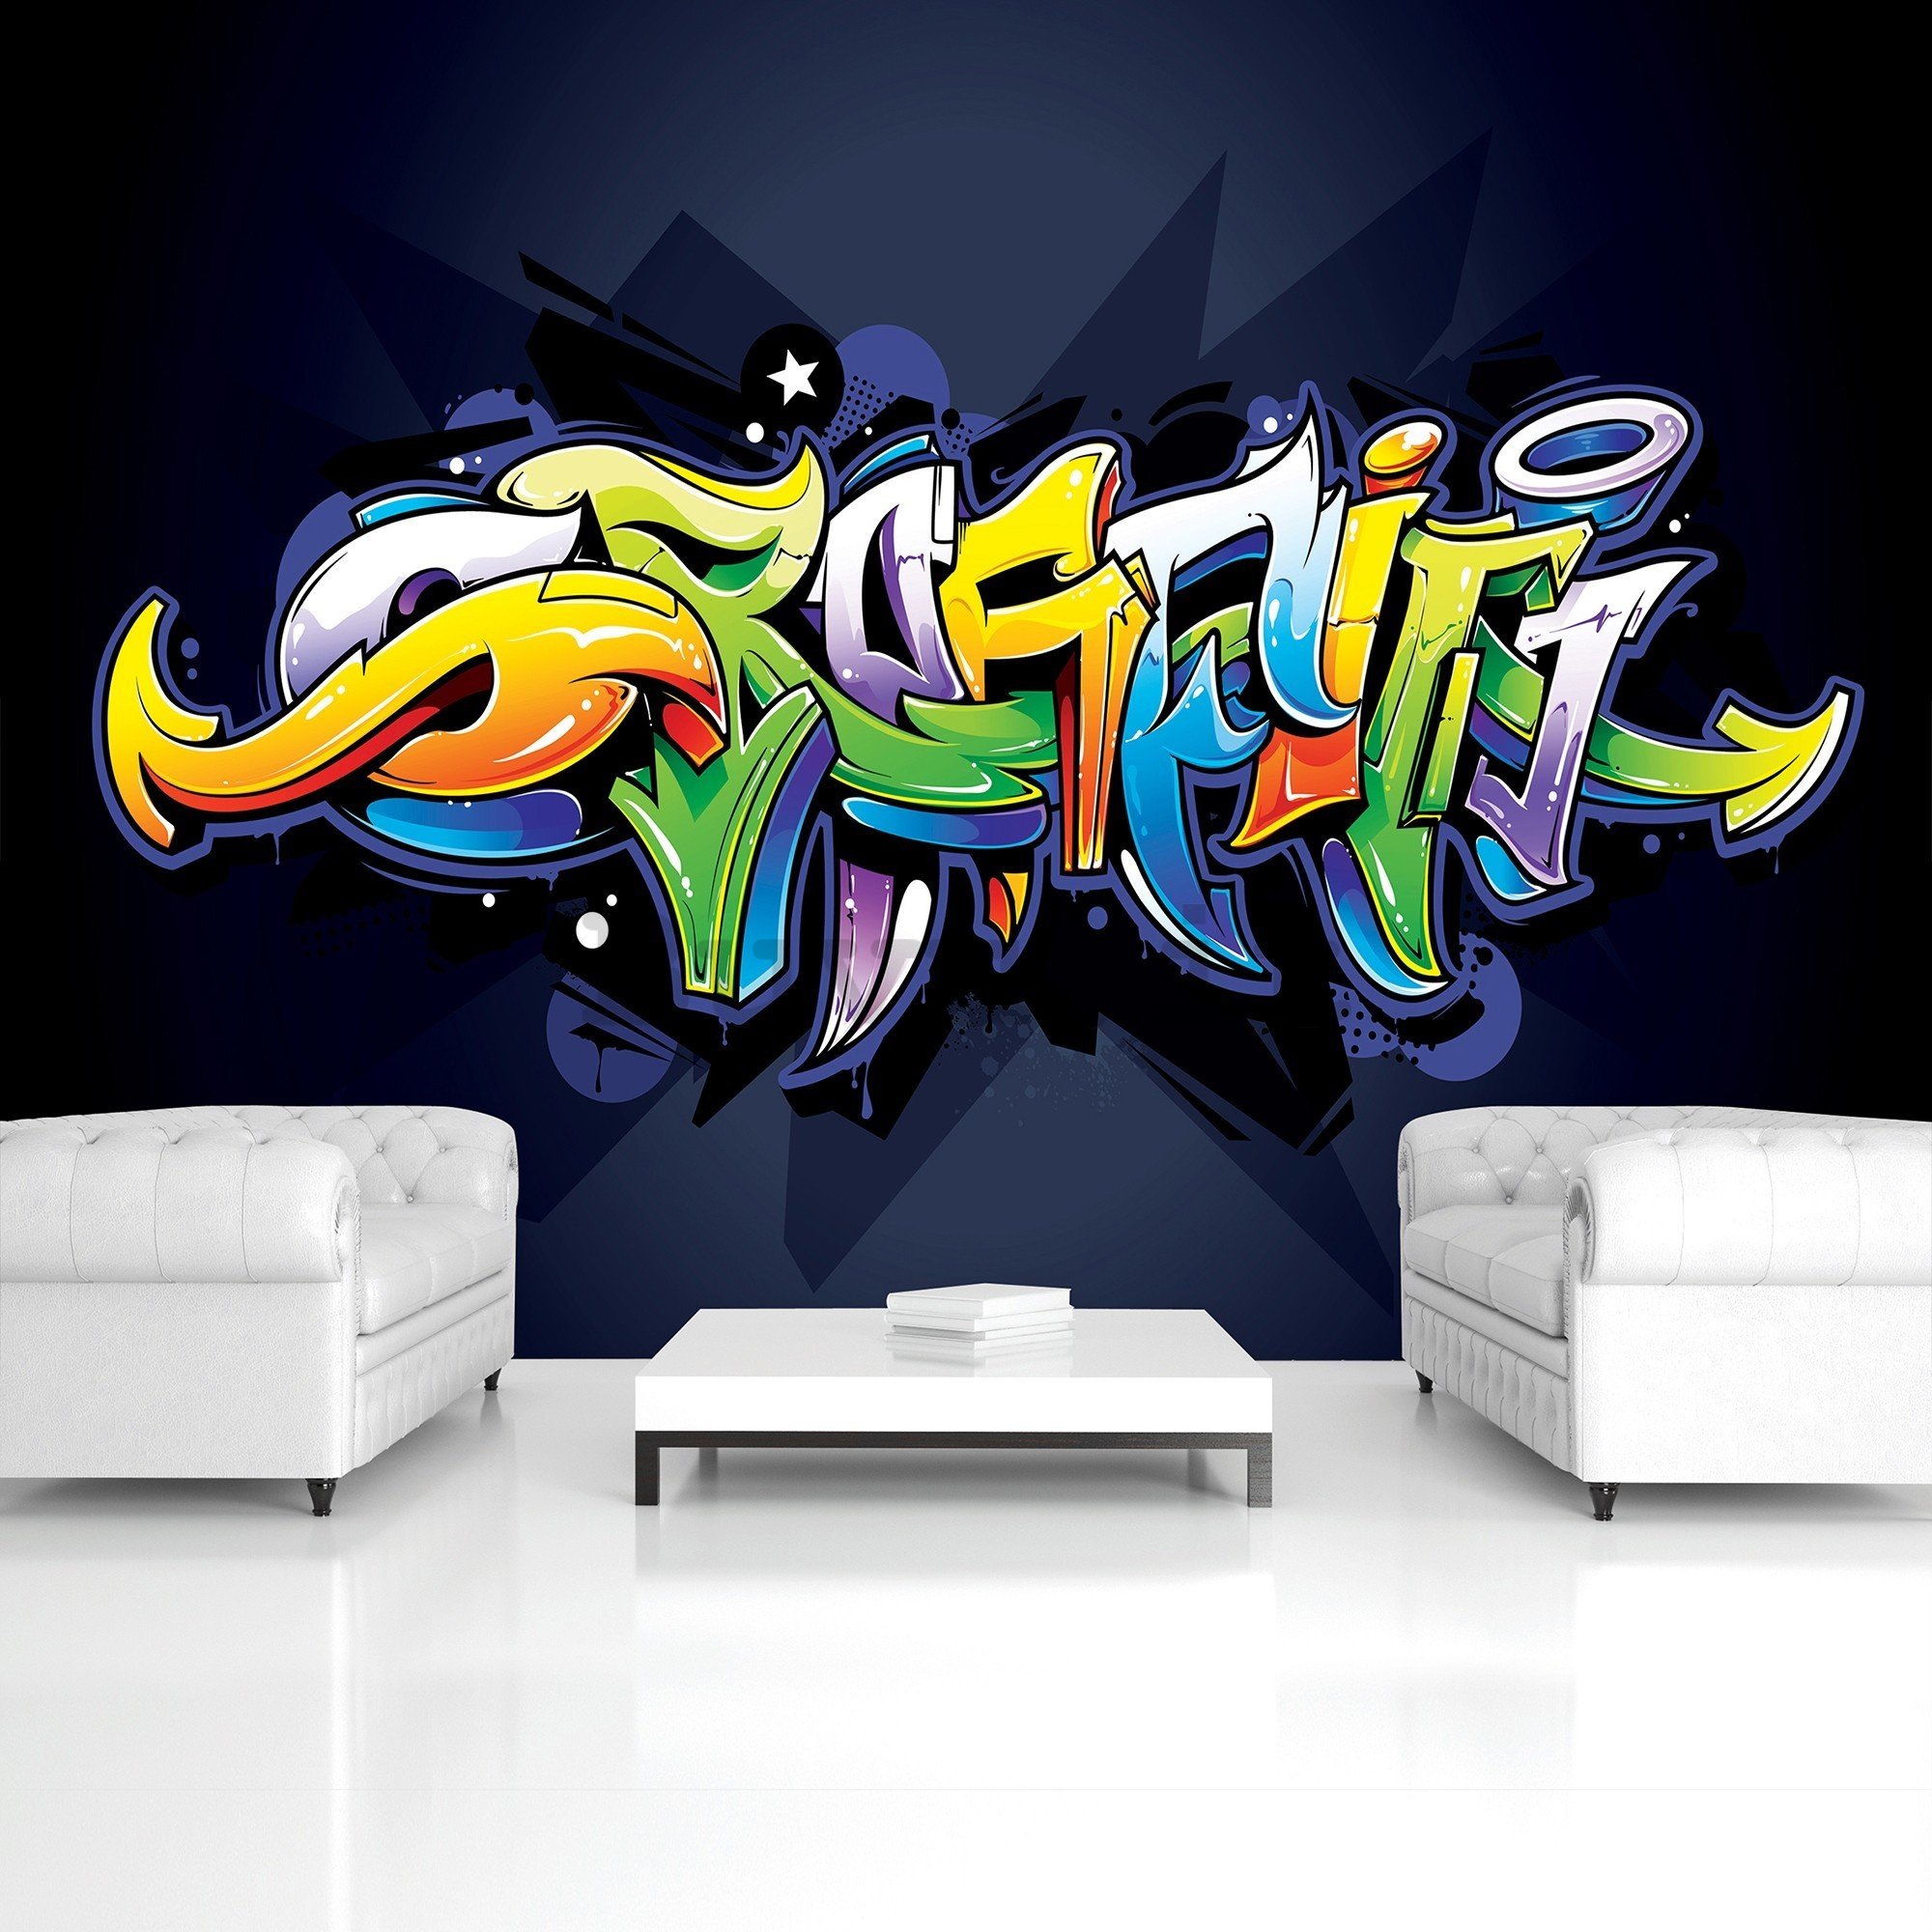 Fotomurale in TNT: Graffiti (4) - 416x254 cm